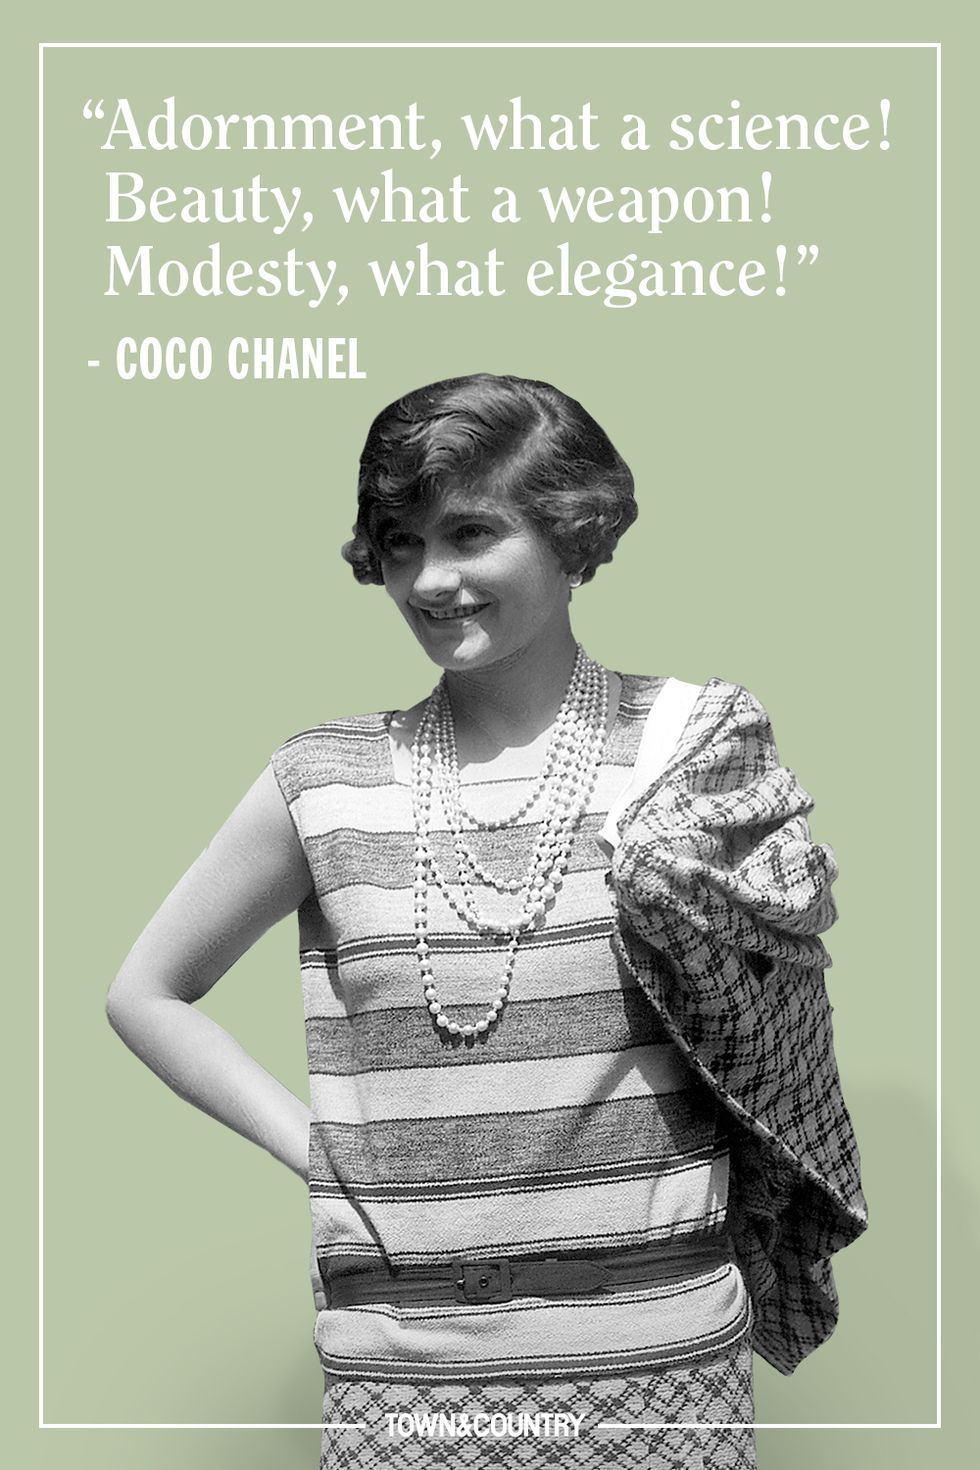 Coco Chanel Elegance Quote Art Print